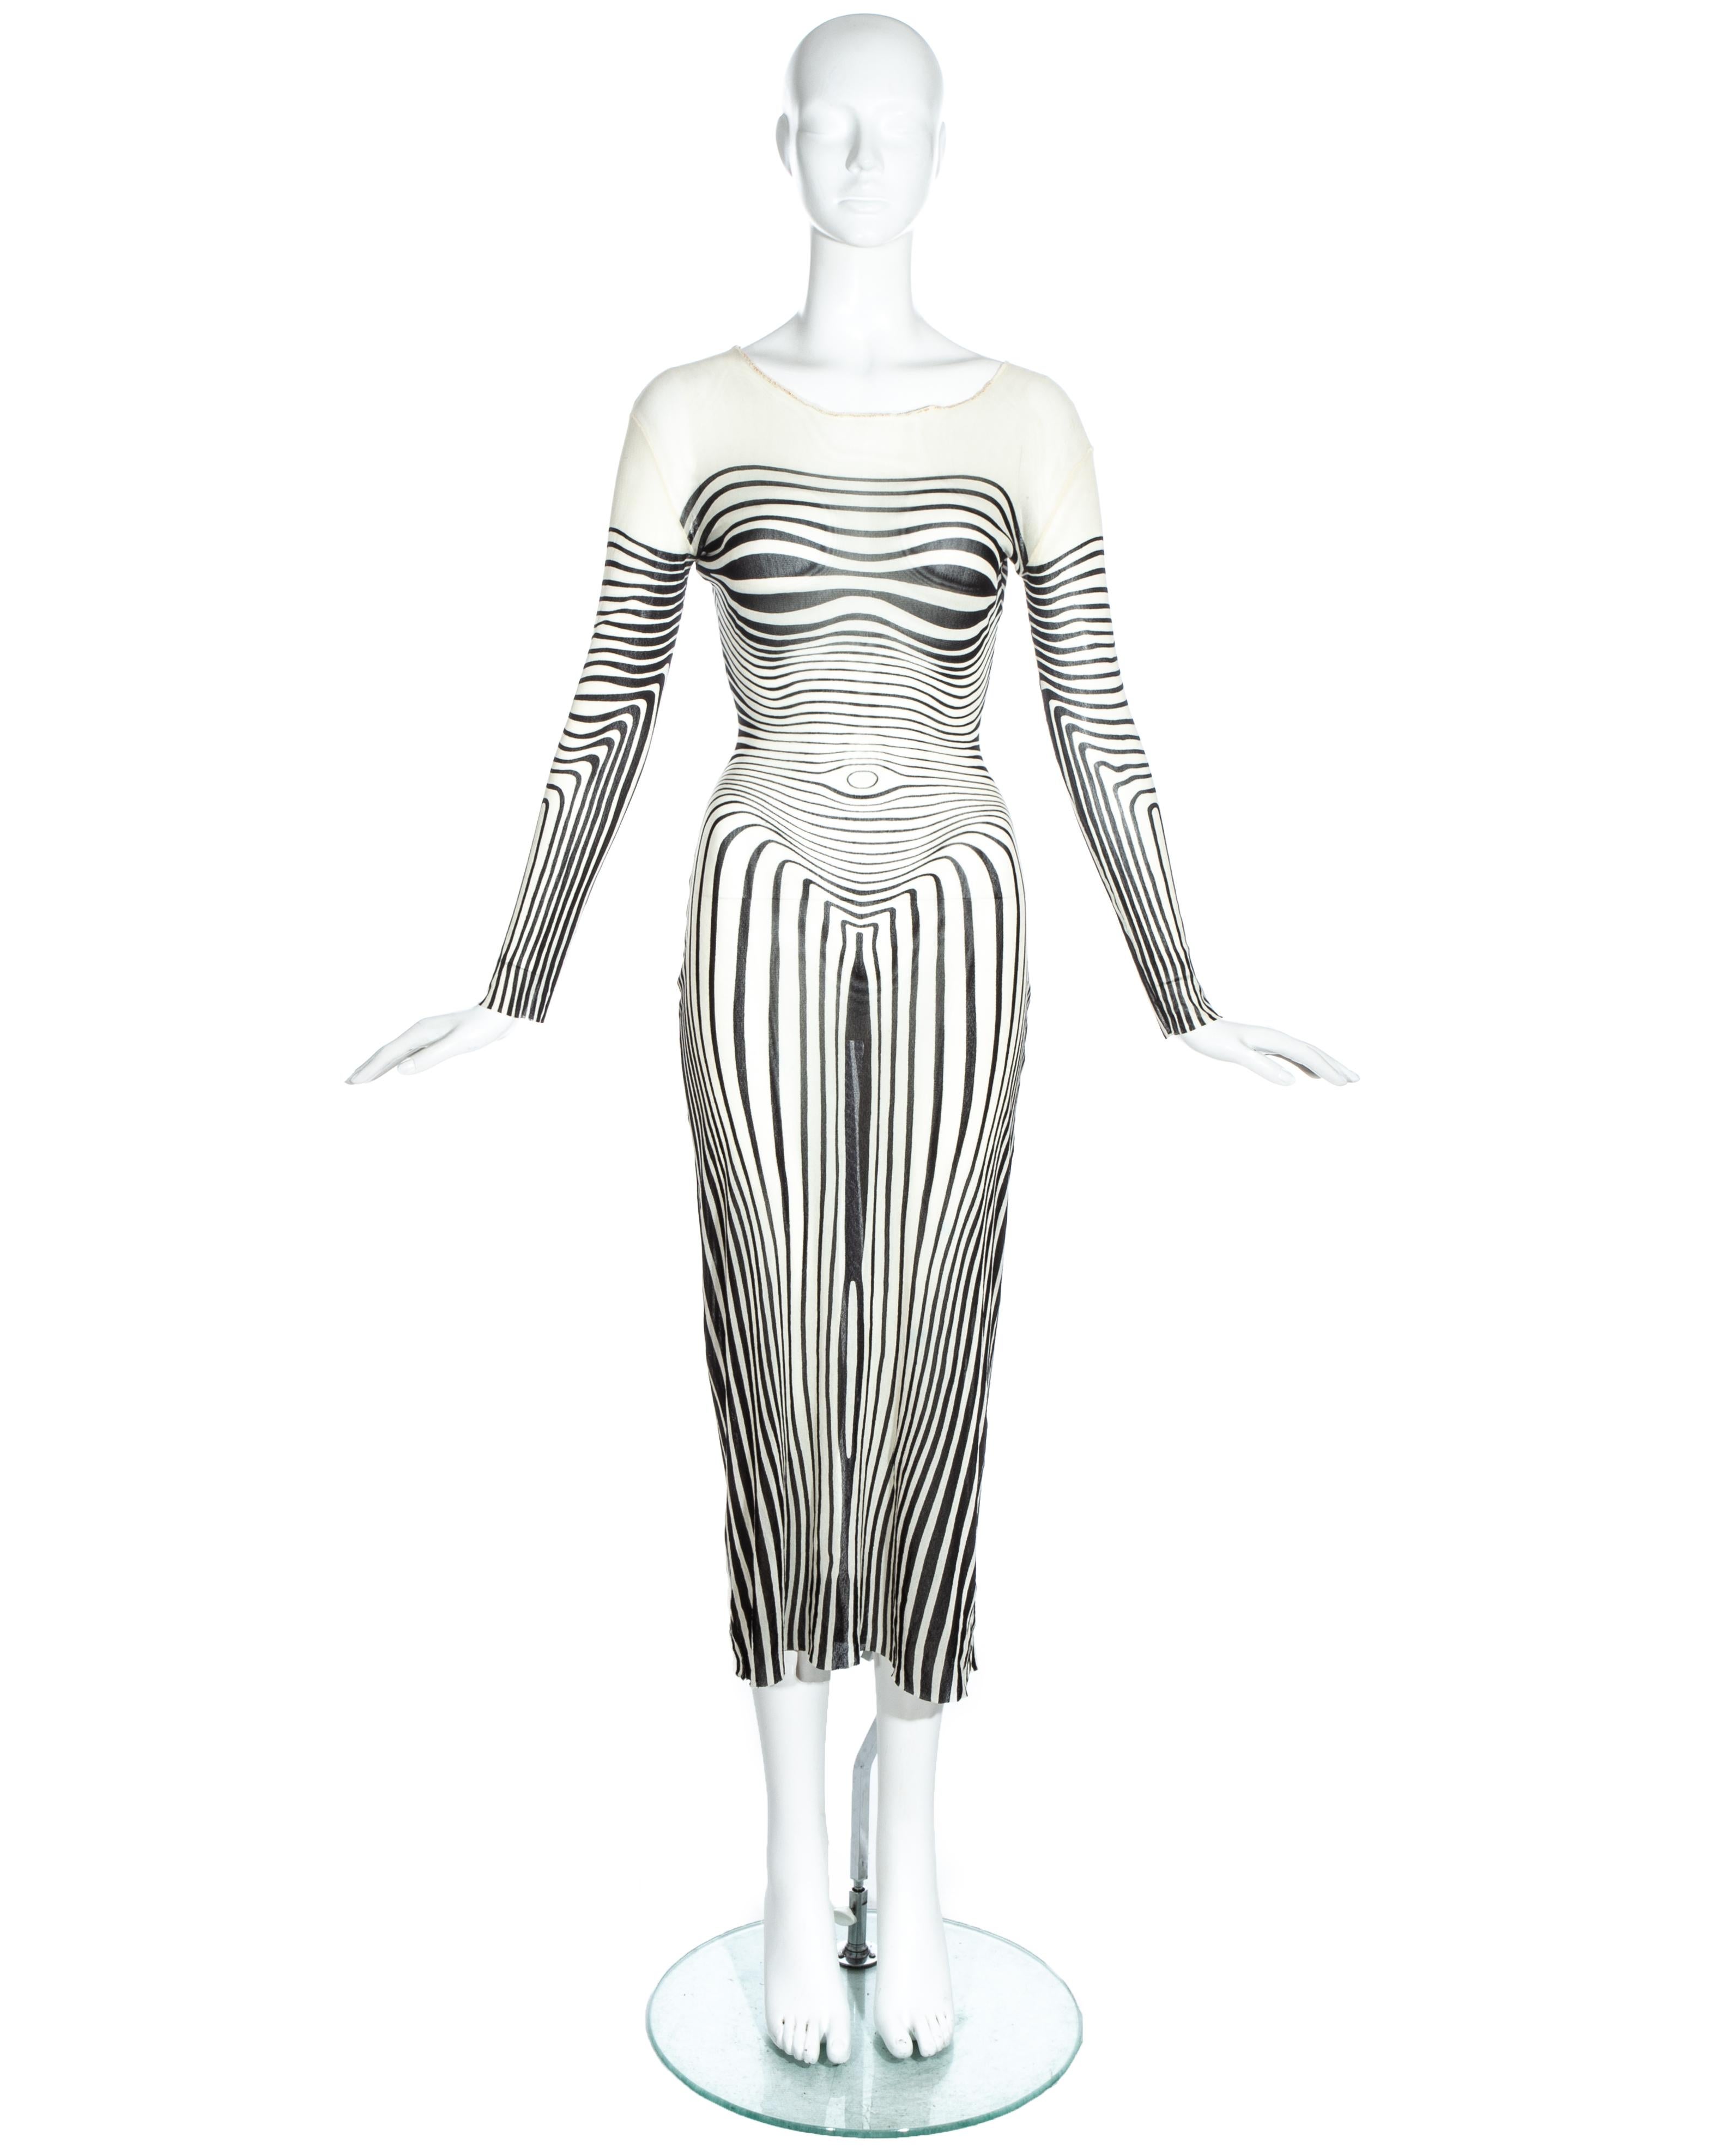 Jean Paul Gaultier stark black on white body contour printed nylon mesh evening dress.

Spring-Summer 1996